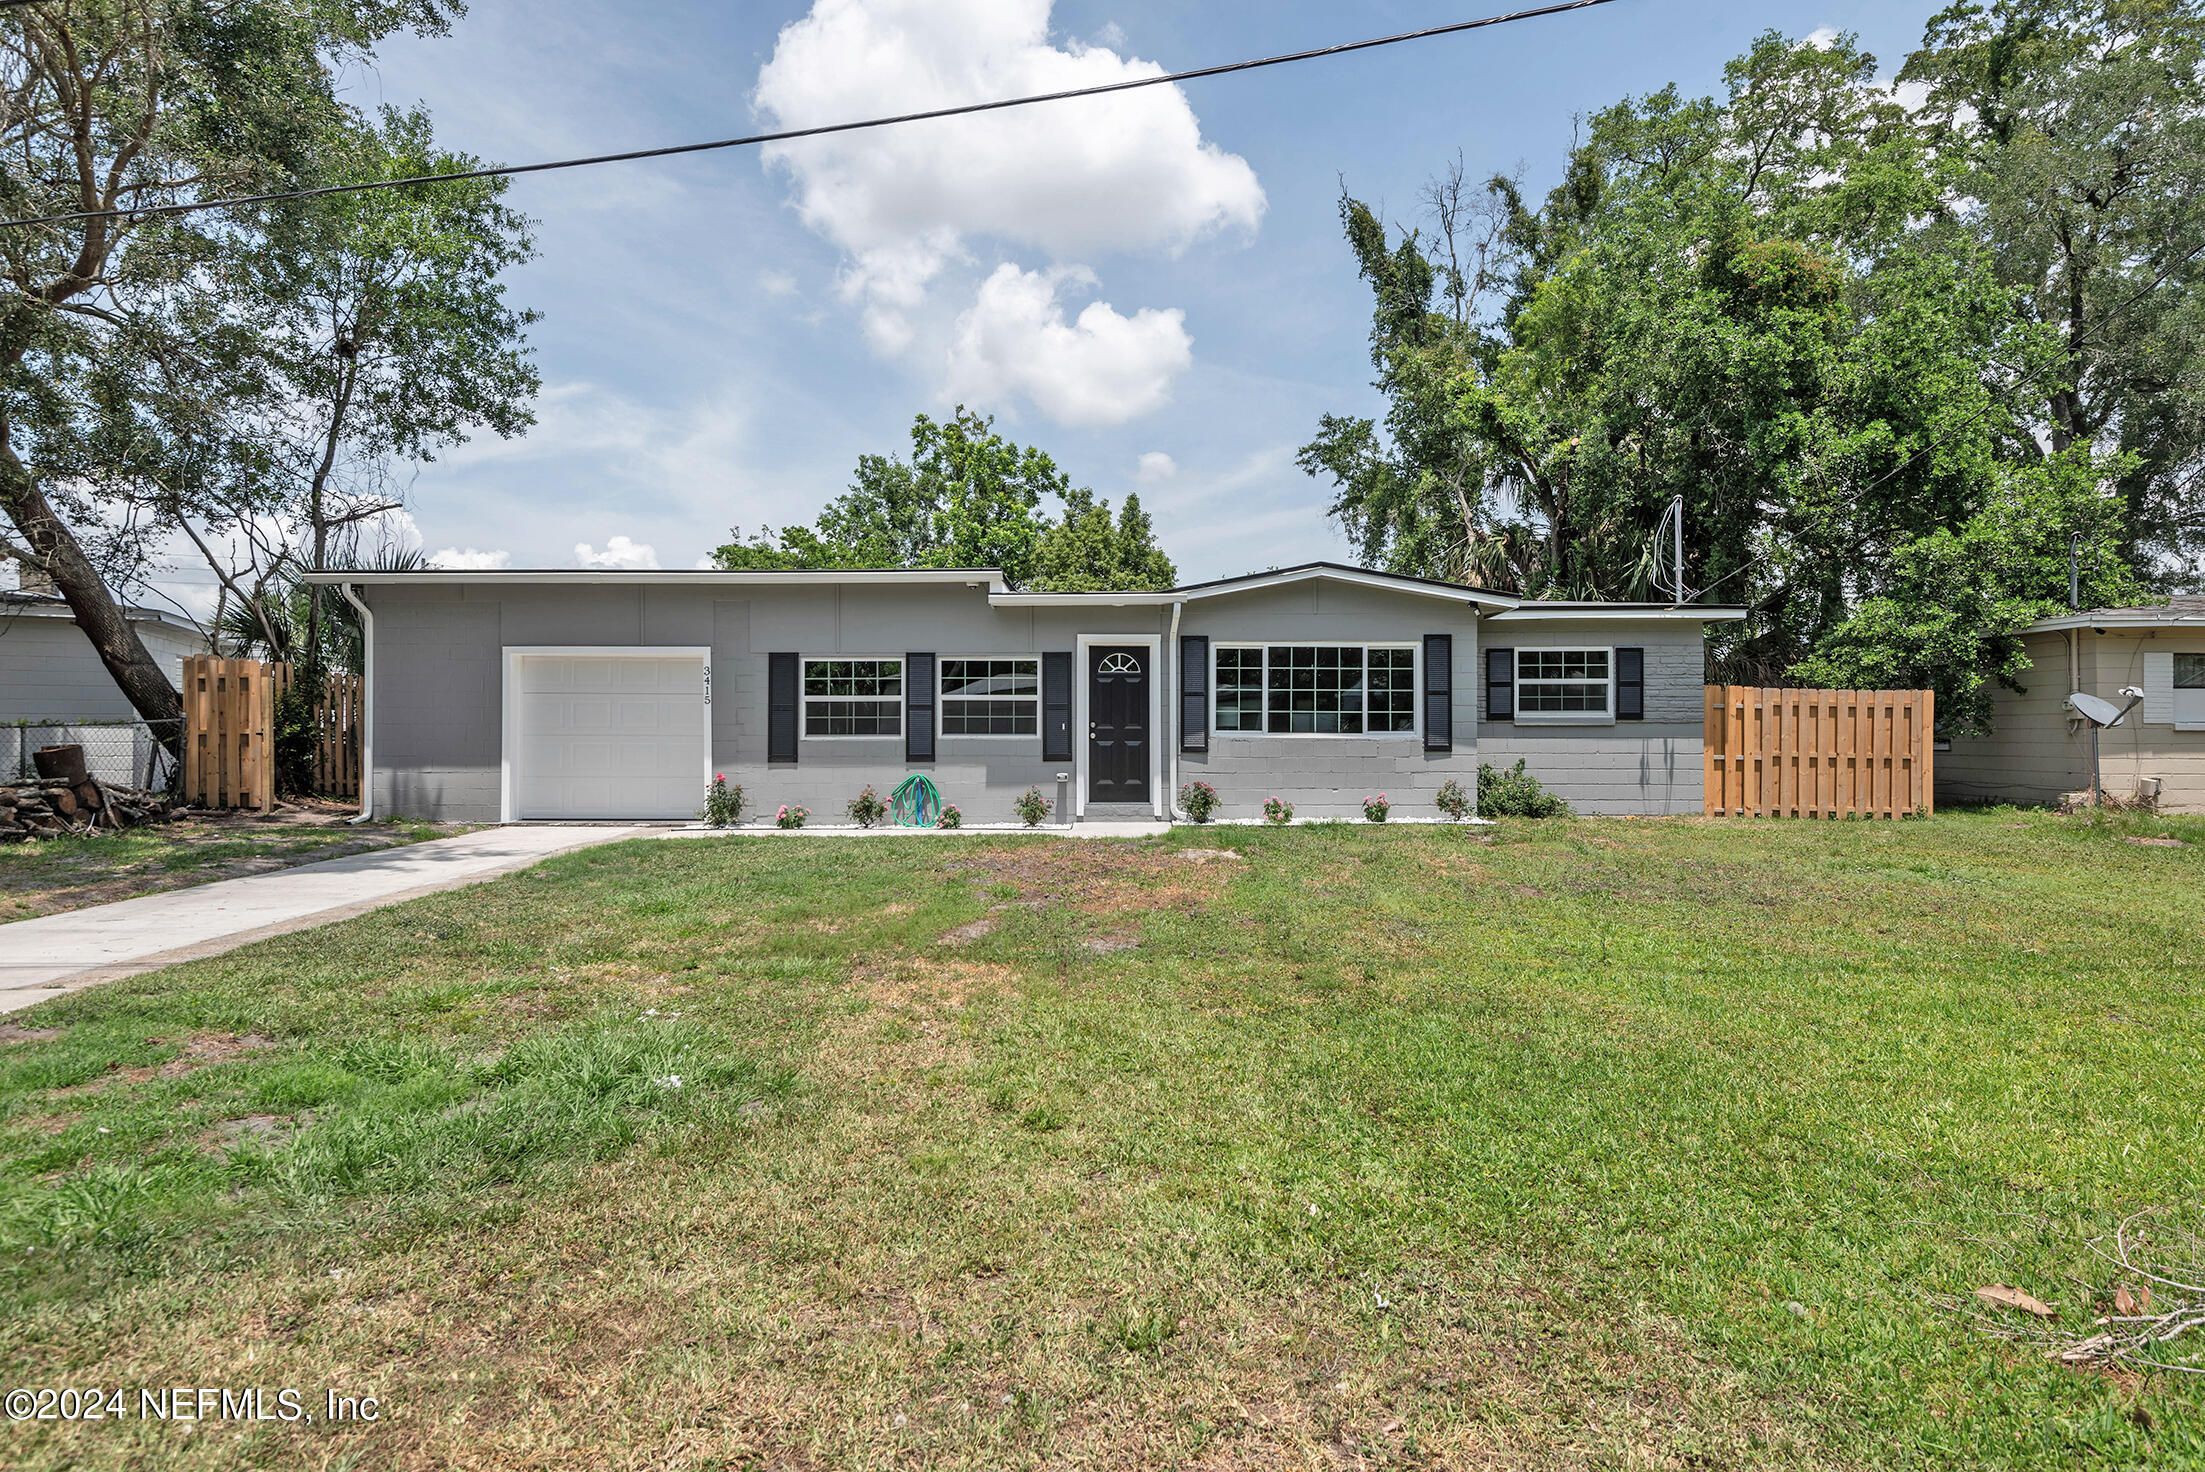 Jacksonville, FL home for sale located at 3415 Drum Street, Jacksonville, FL 32207